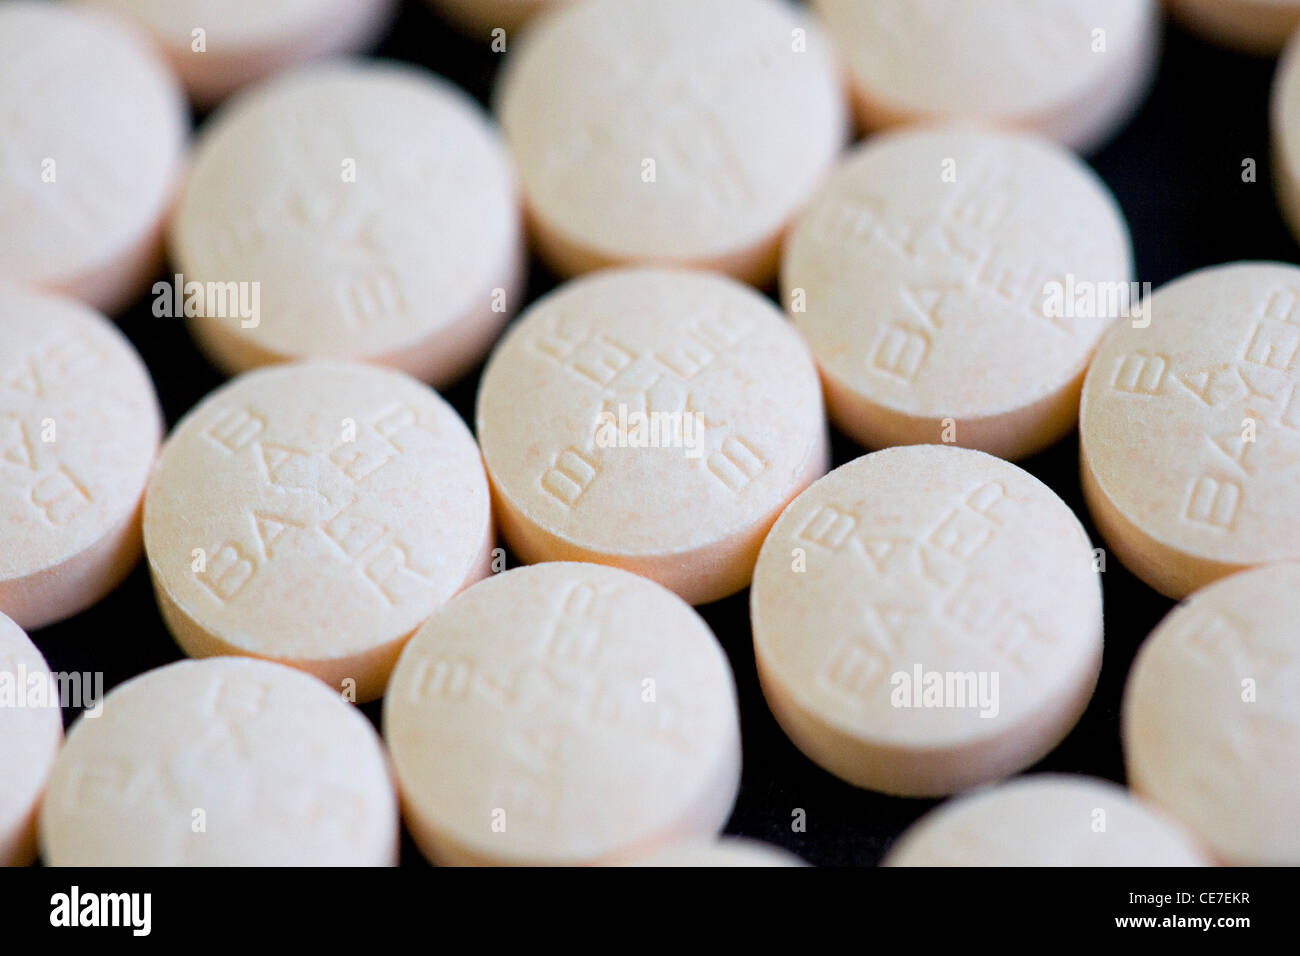 Aspirina de Bayer Fotografía de stock - Alamy